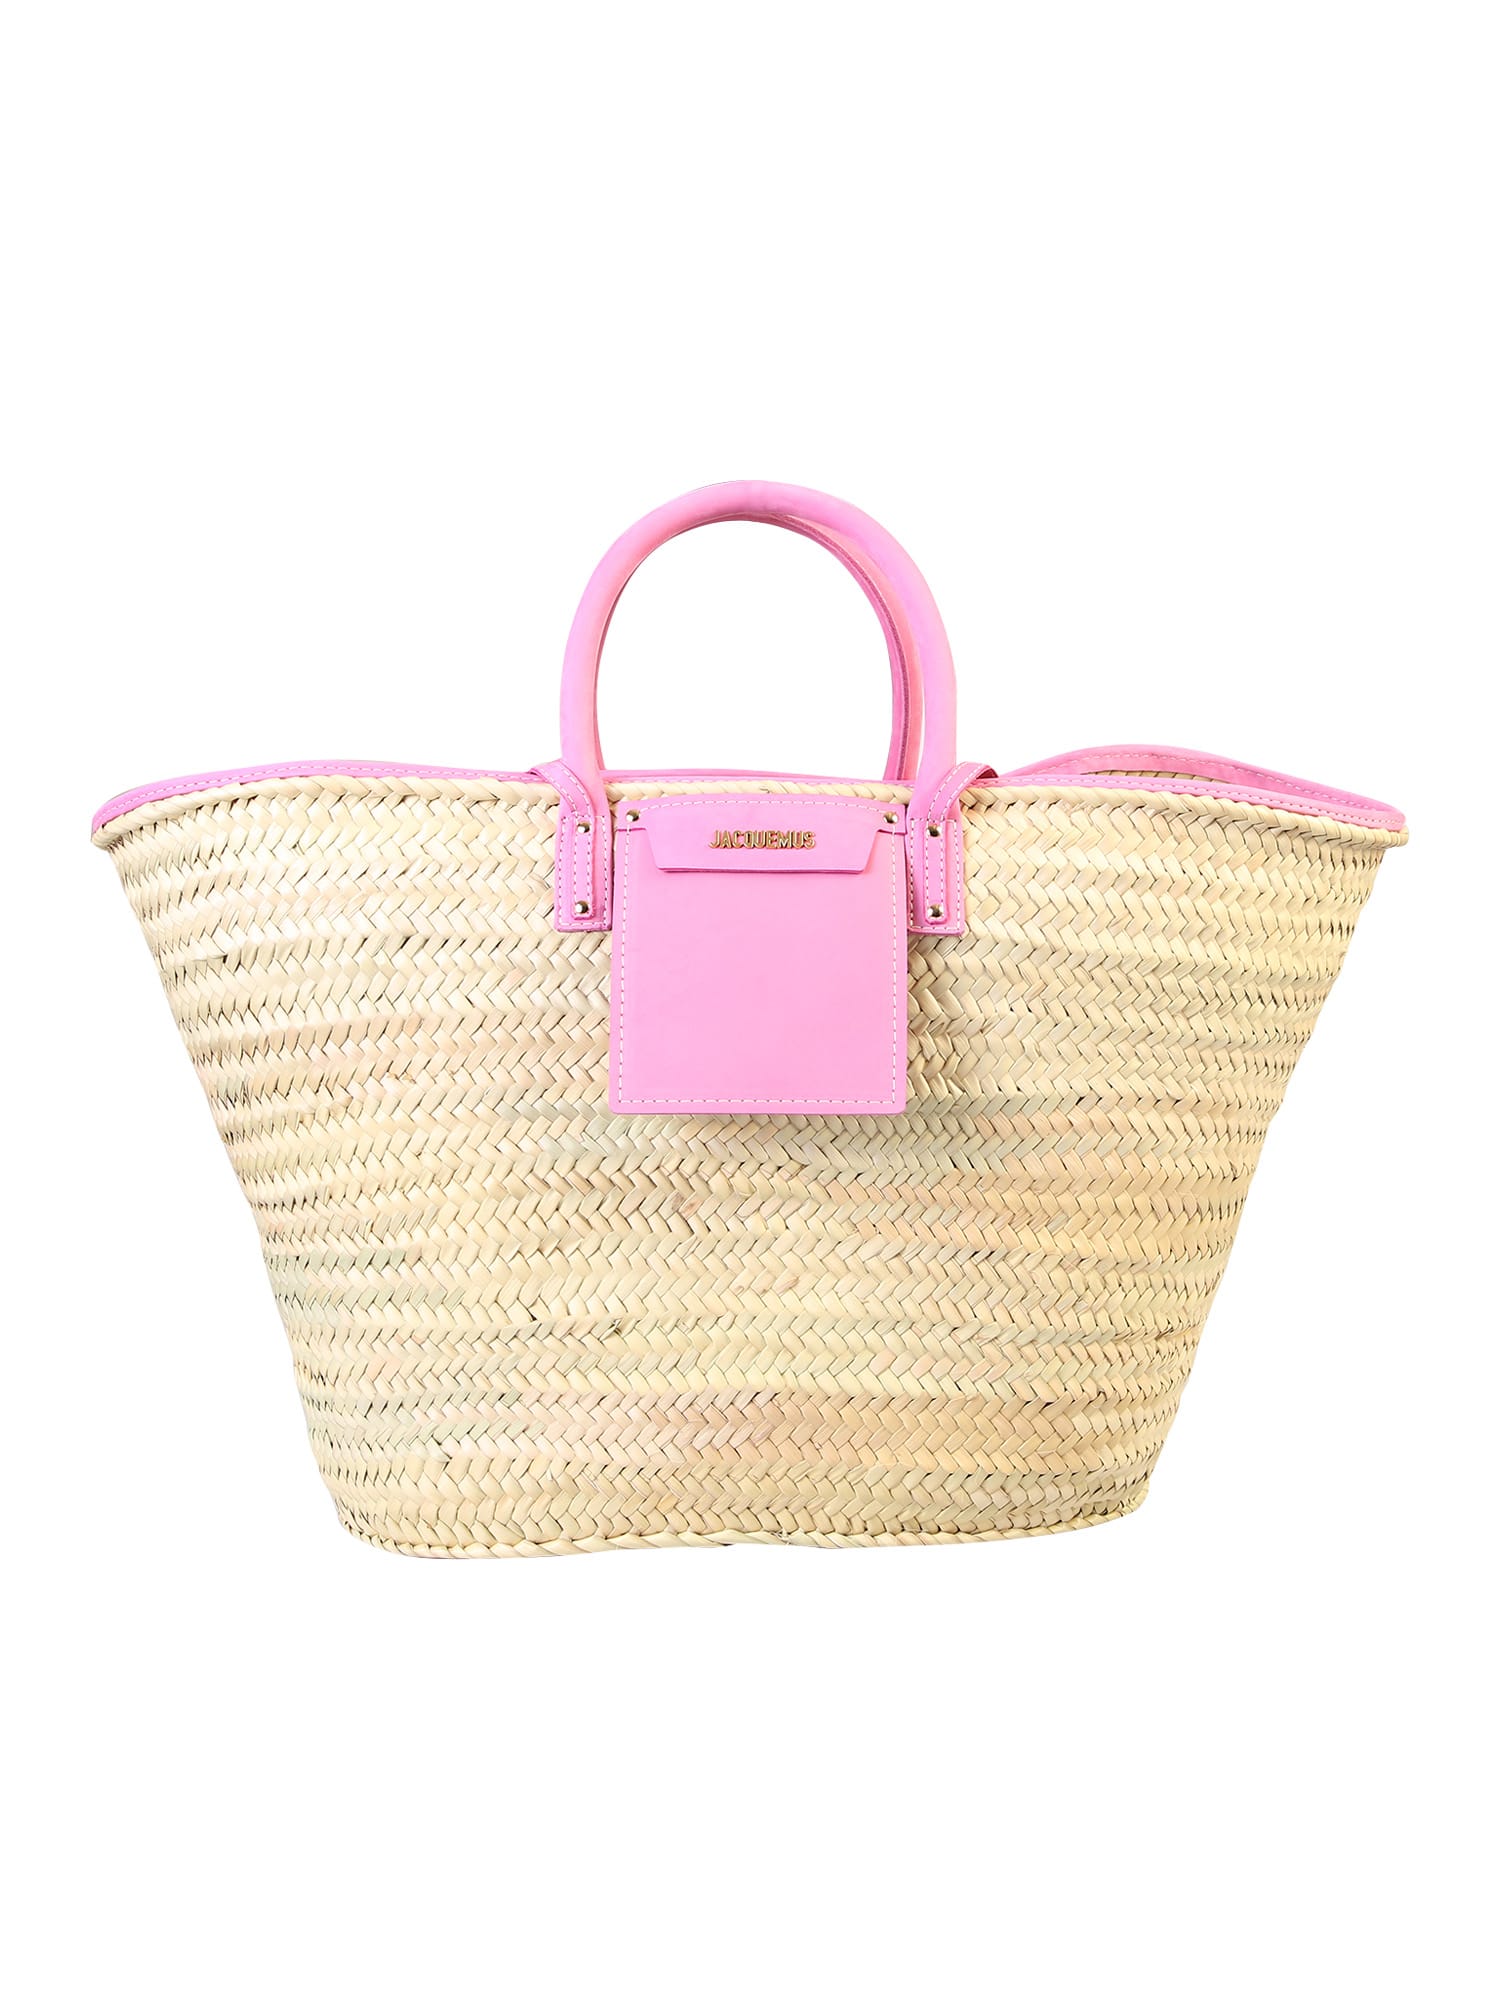 Jacquemus Le Grand Panier Soleil Bag In Pink | ModeSens